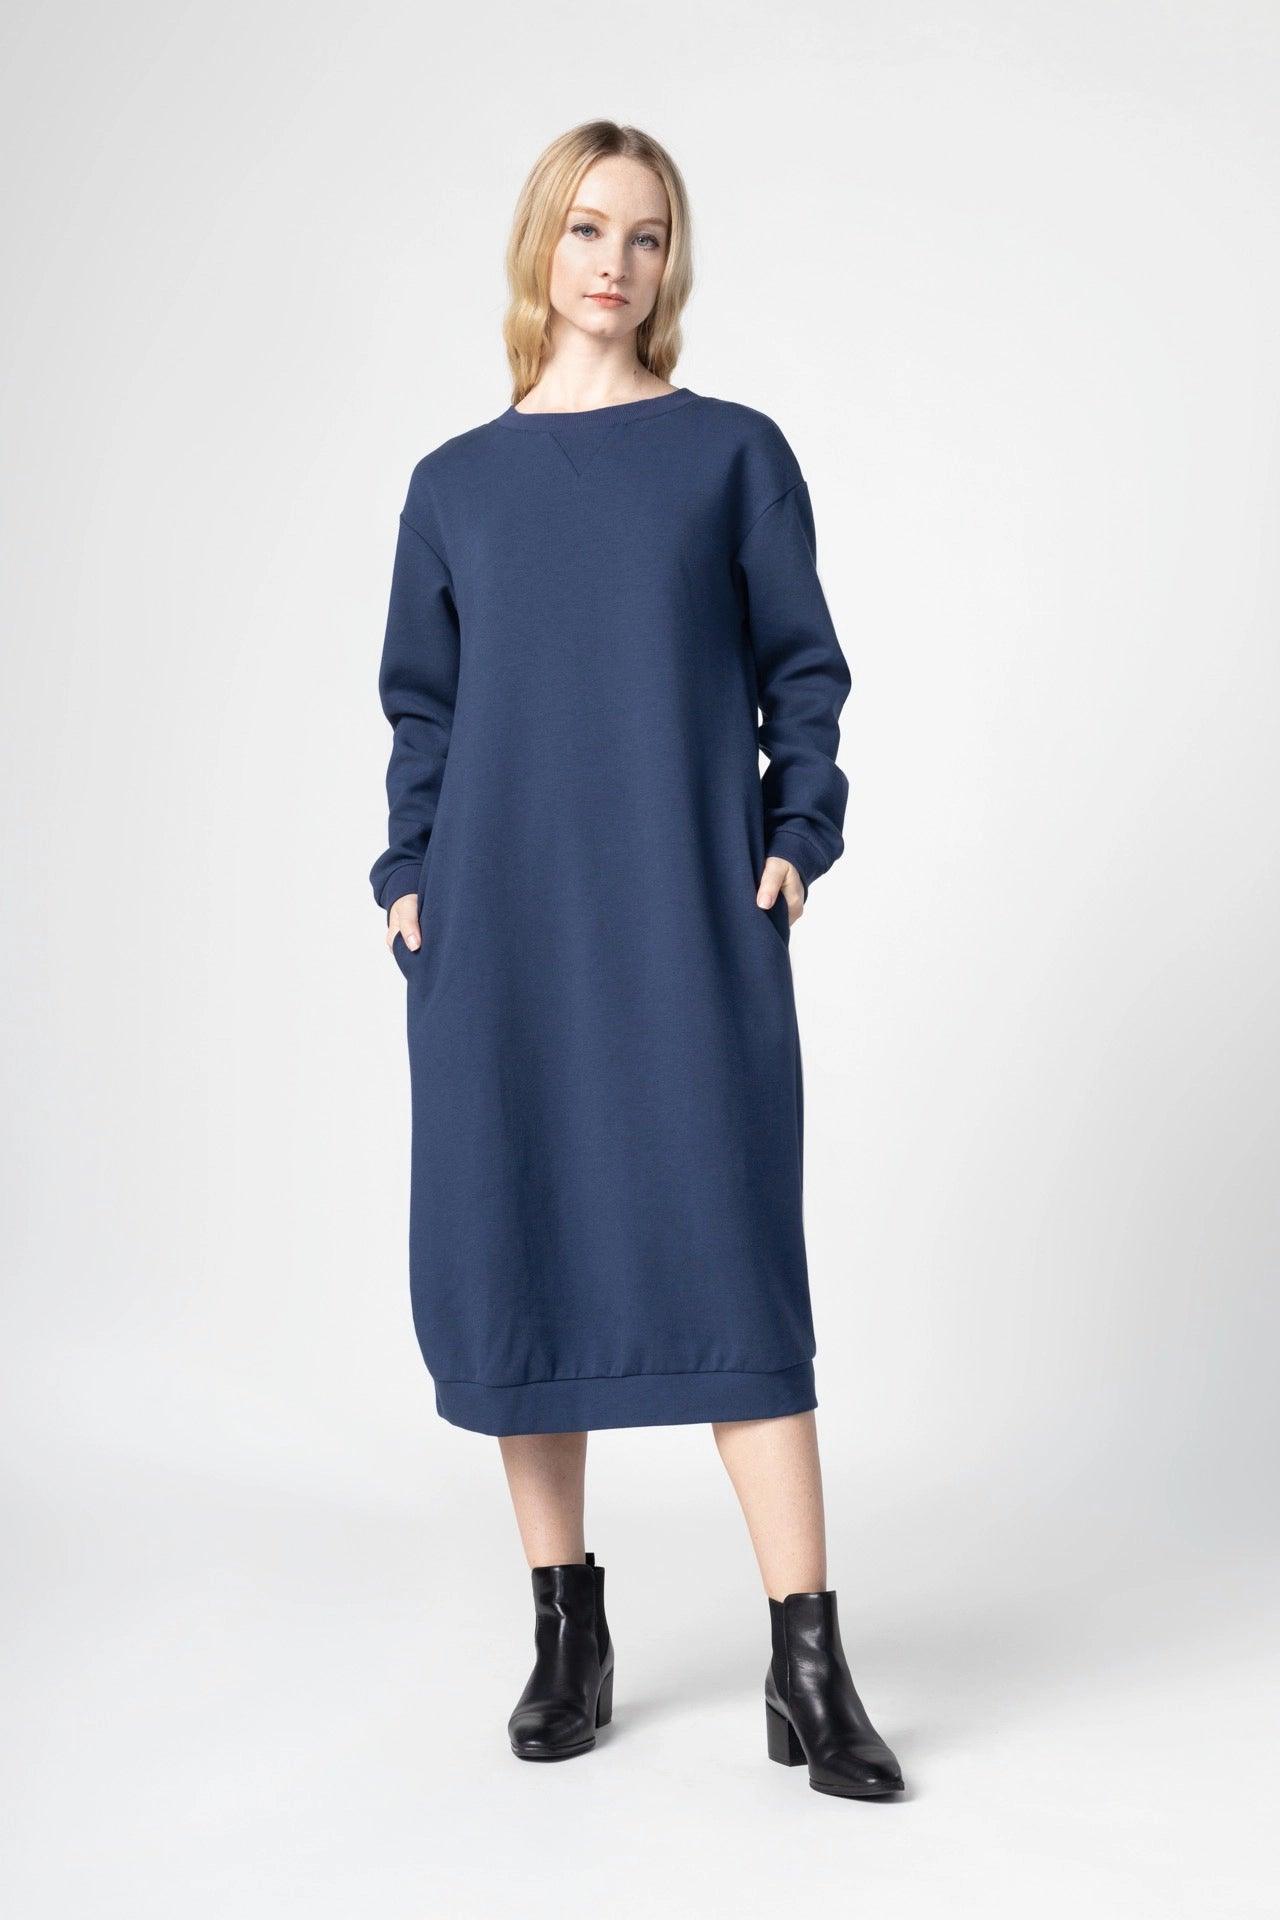 Women's Bonding Long Sweatshirt Dress - NOT LABELED